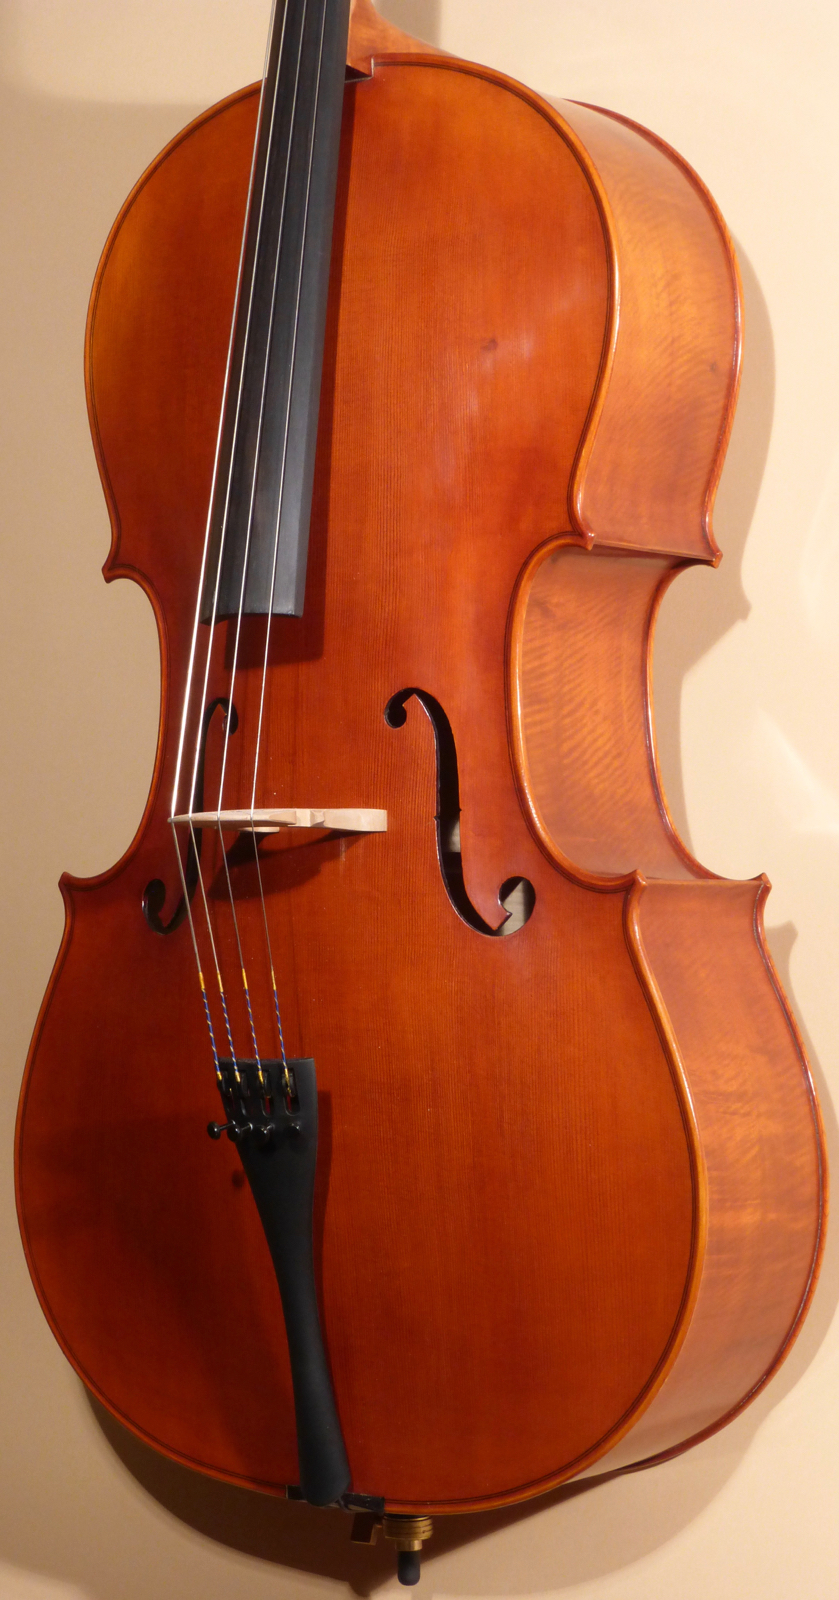 New Ji Model 55 Exquisitus 4/4 Cello Product